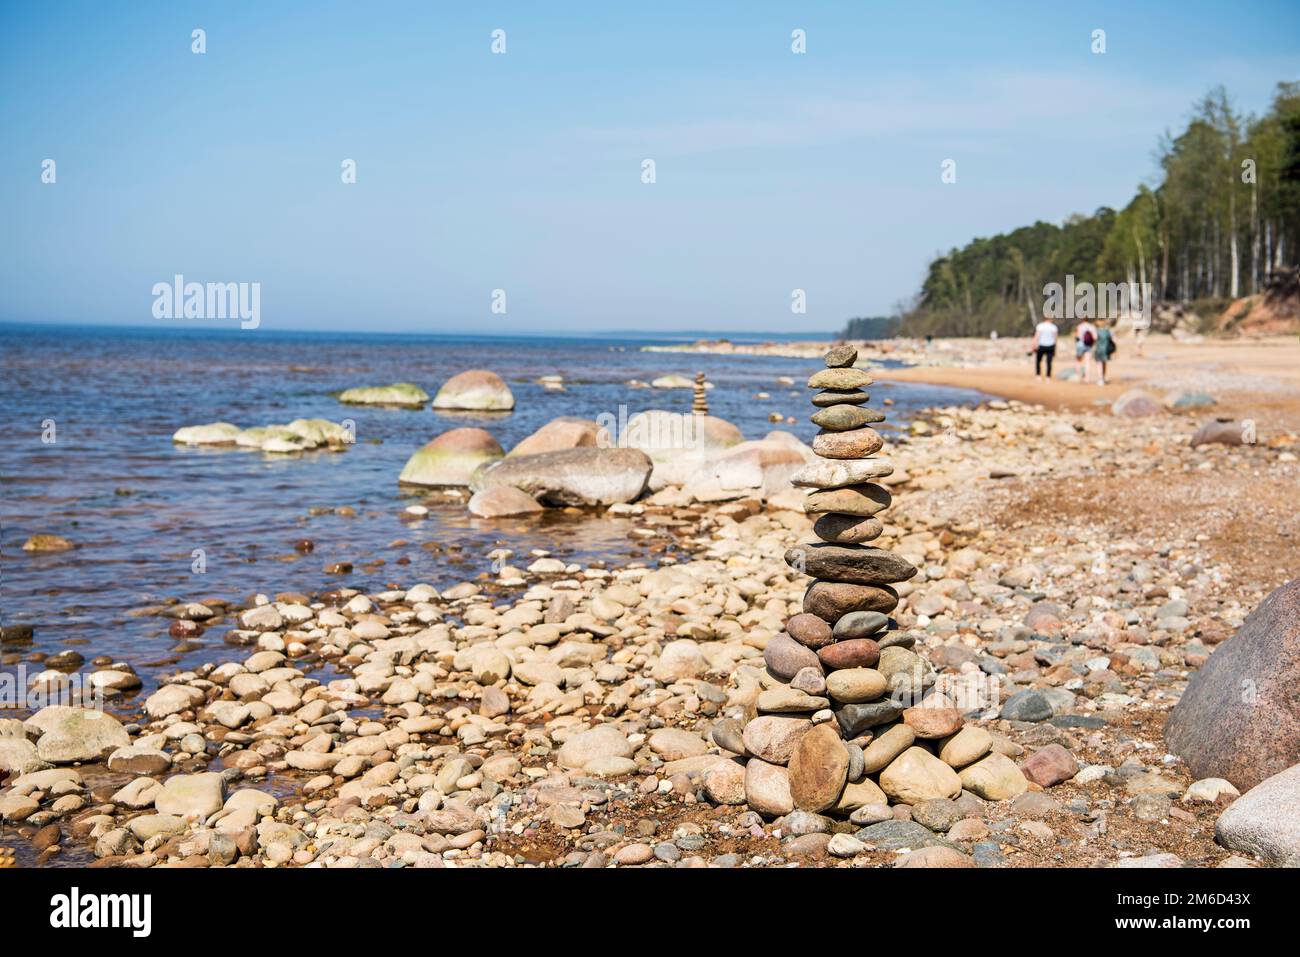 Stones balance on the beach. Stock Photo